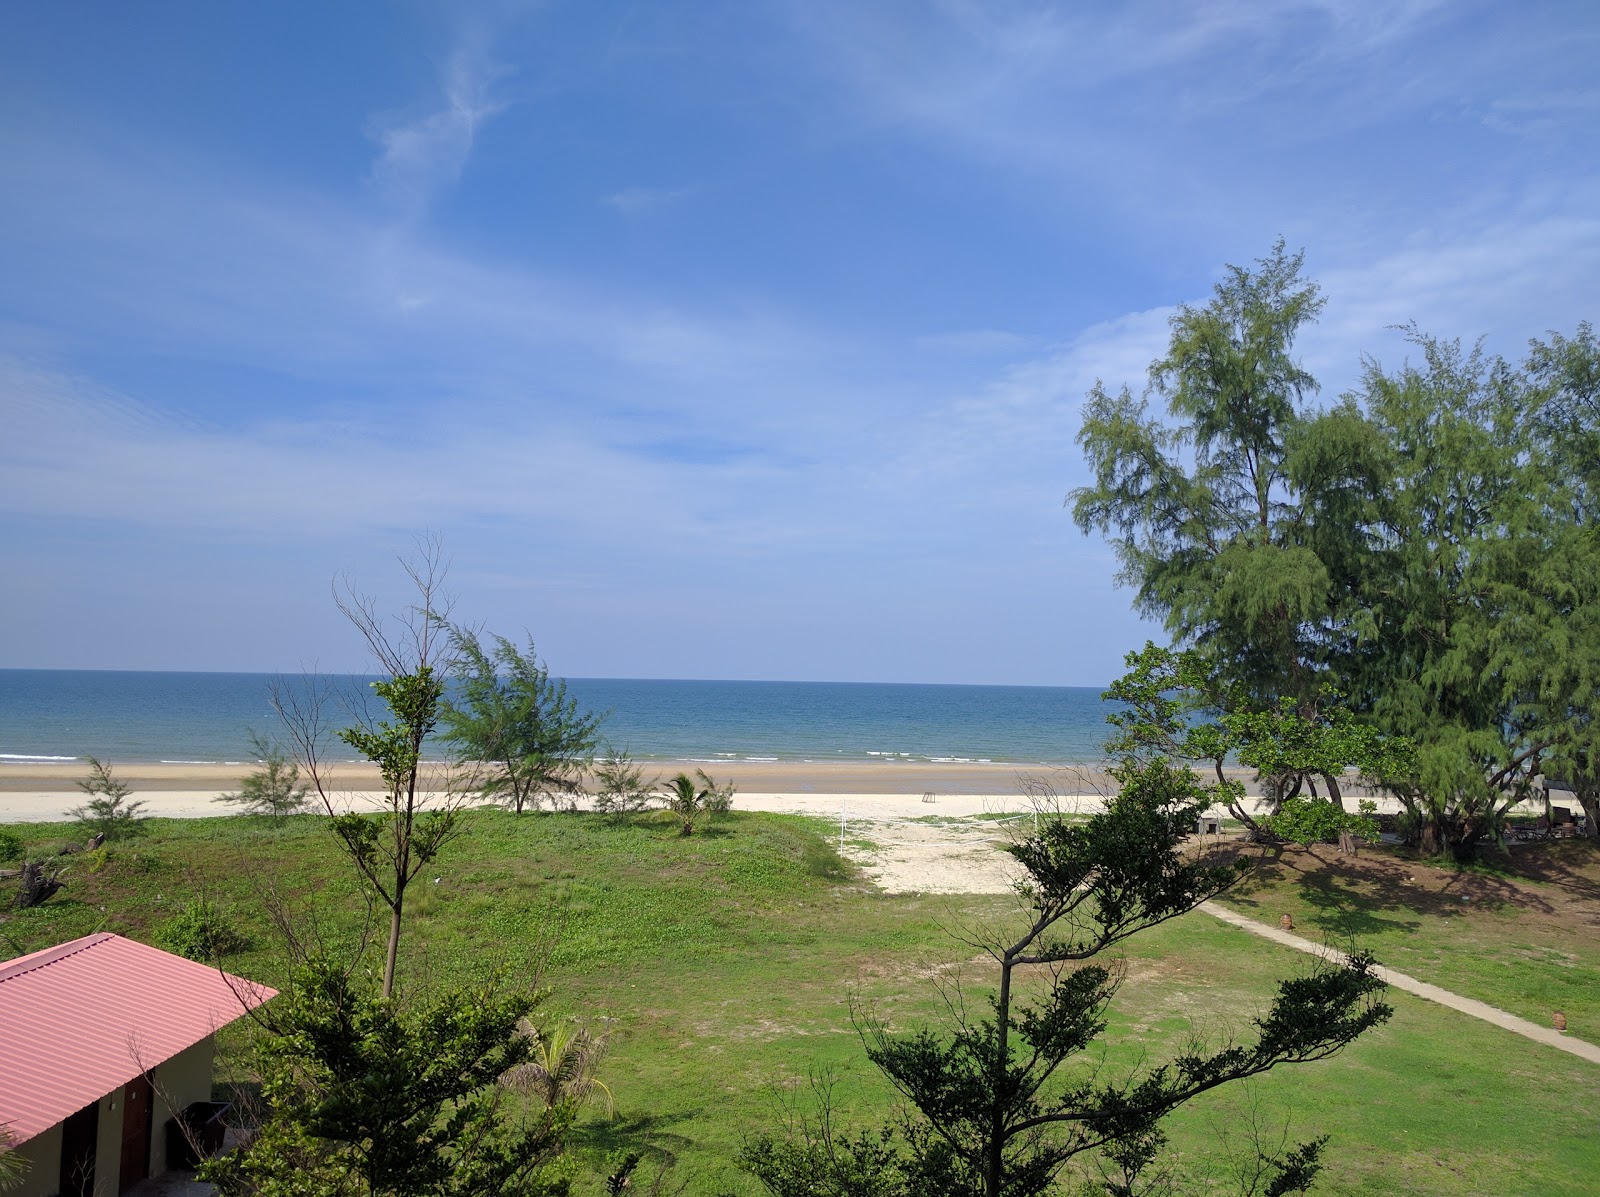 Foto de Gebeng Kampung Beach e o assentamento